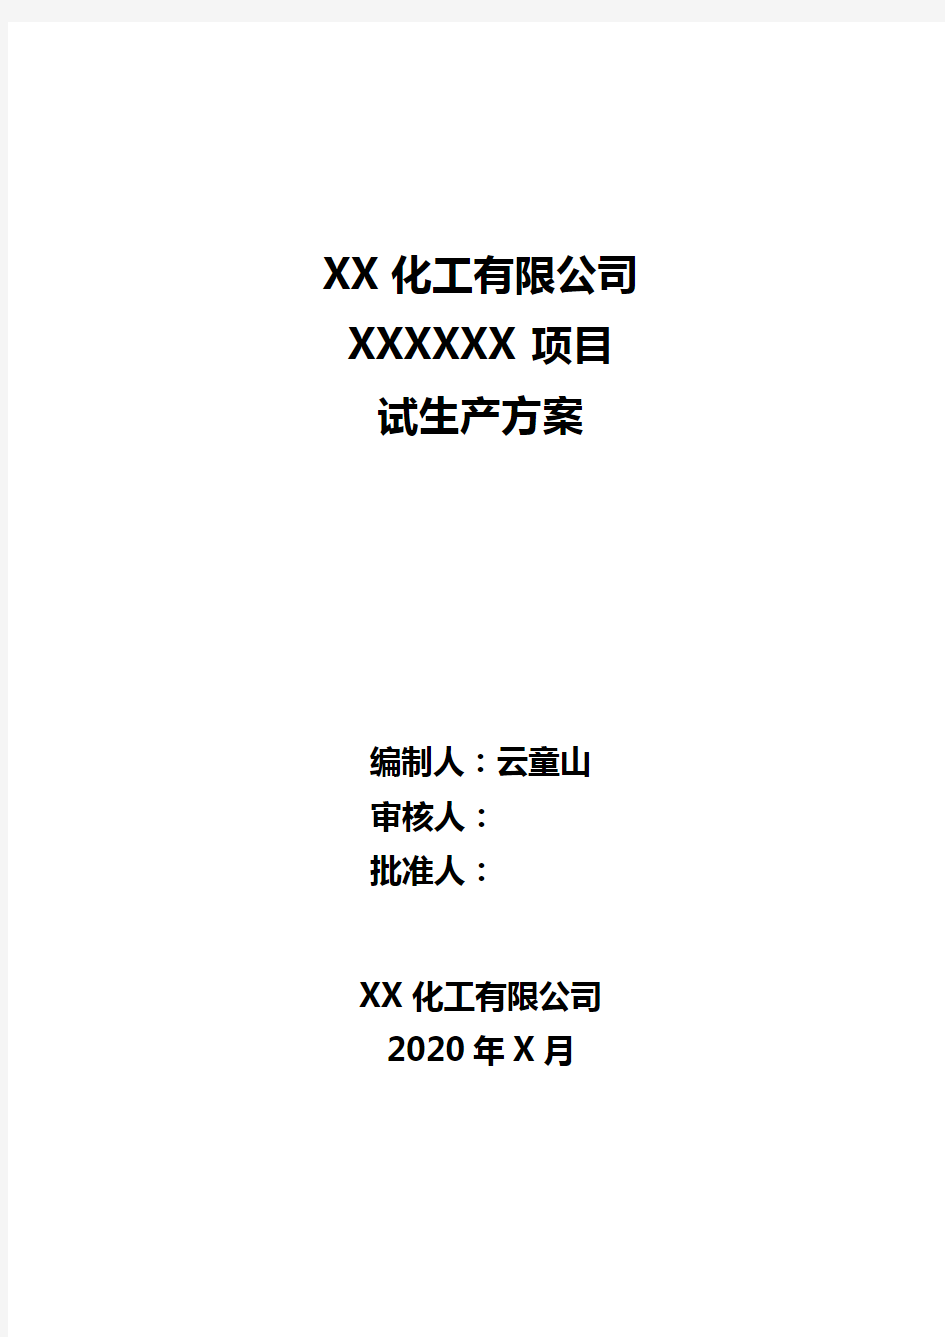 XX化工有限公司XXXXXX项目试生产方案